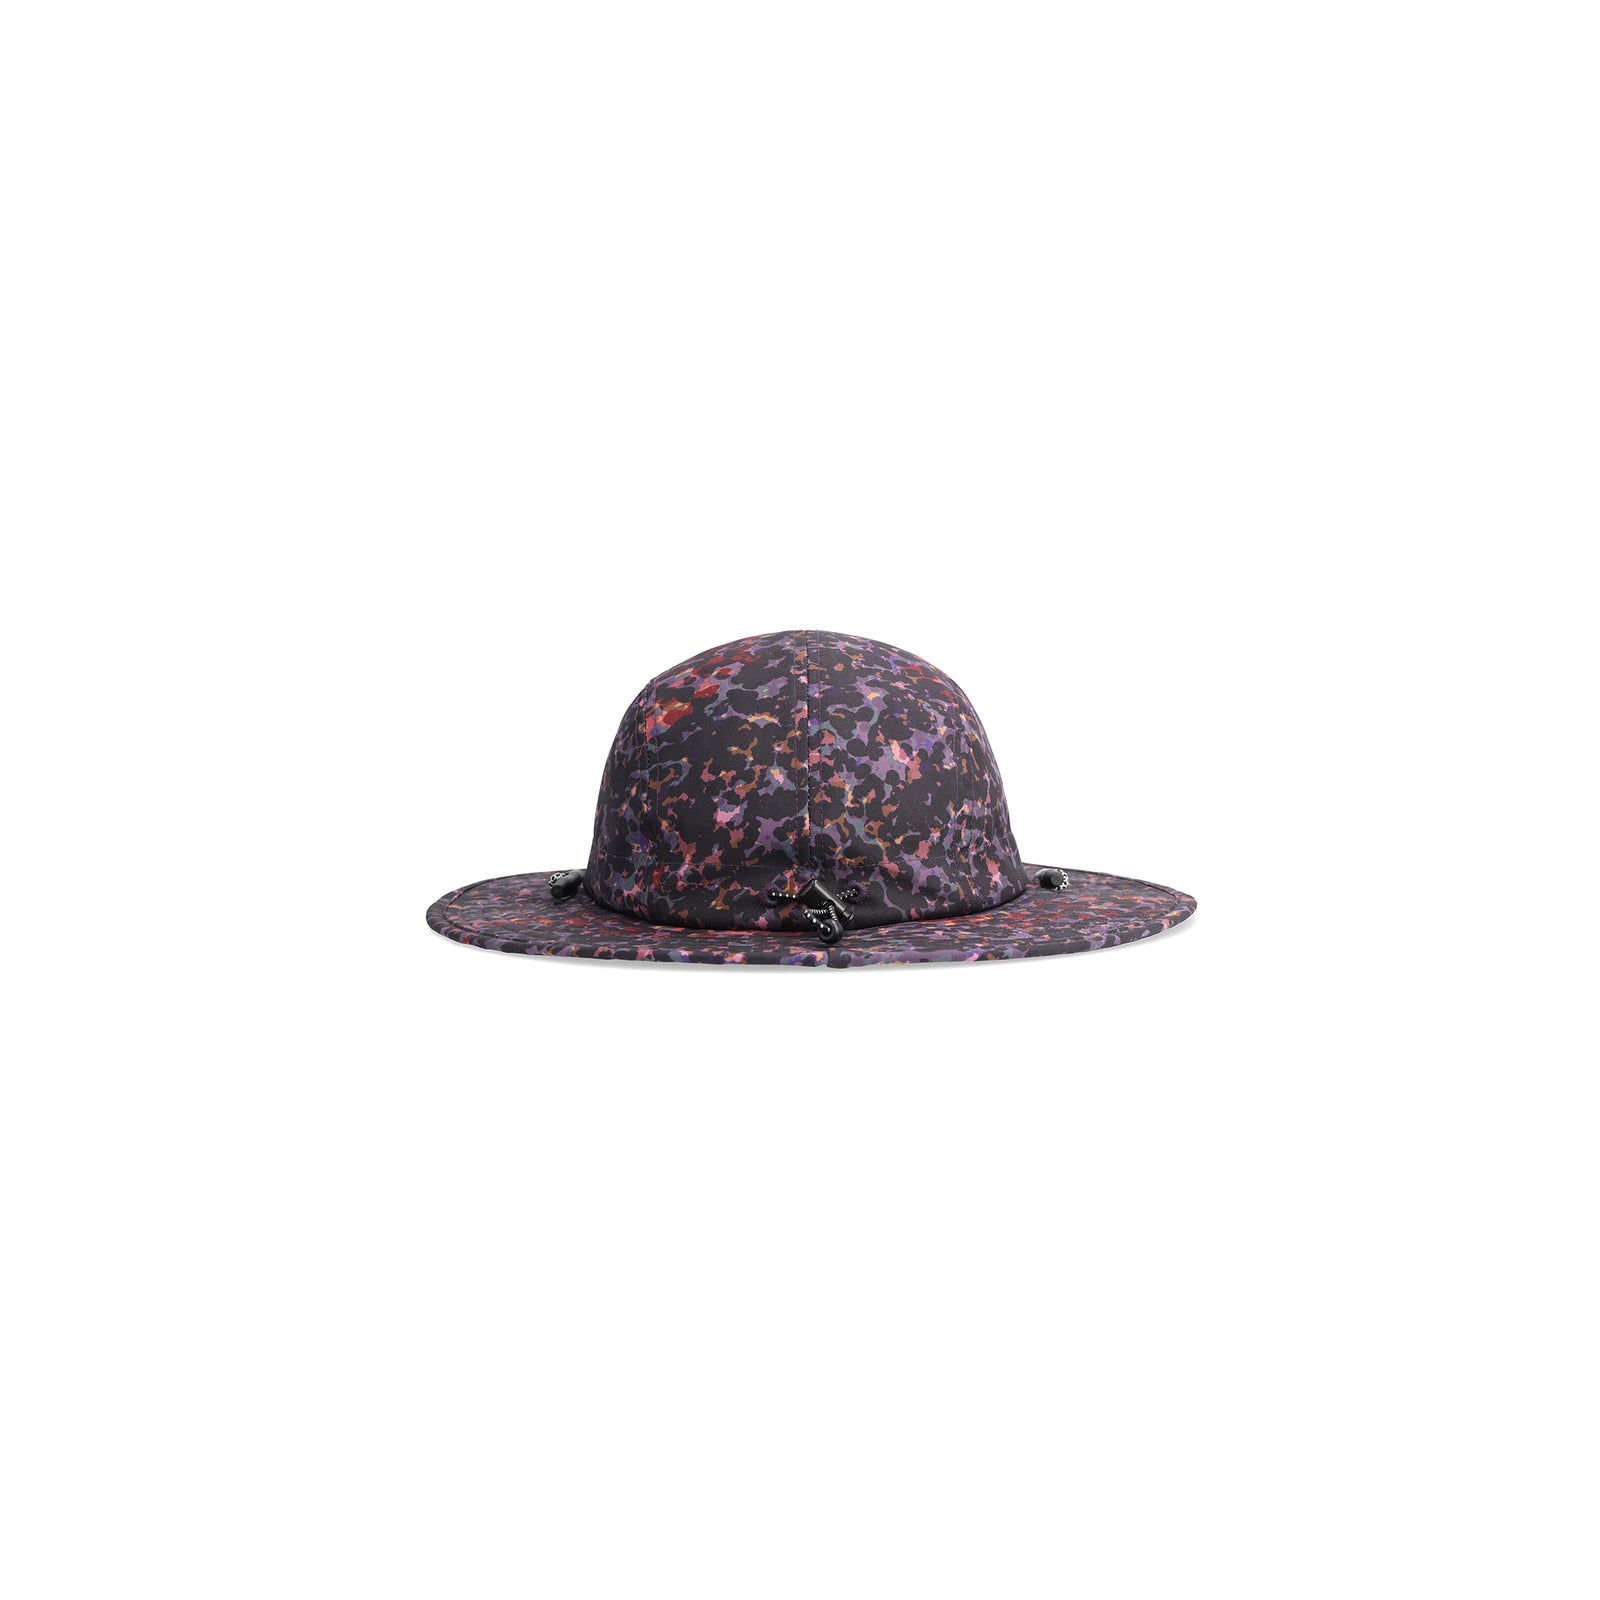 Back View of Topo Designs Sun Hat in "Black Meteor"